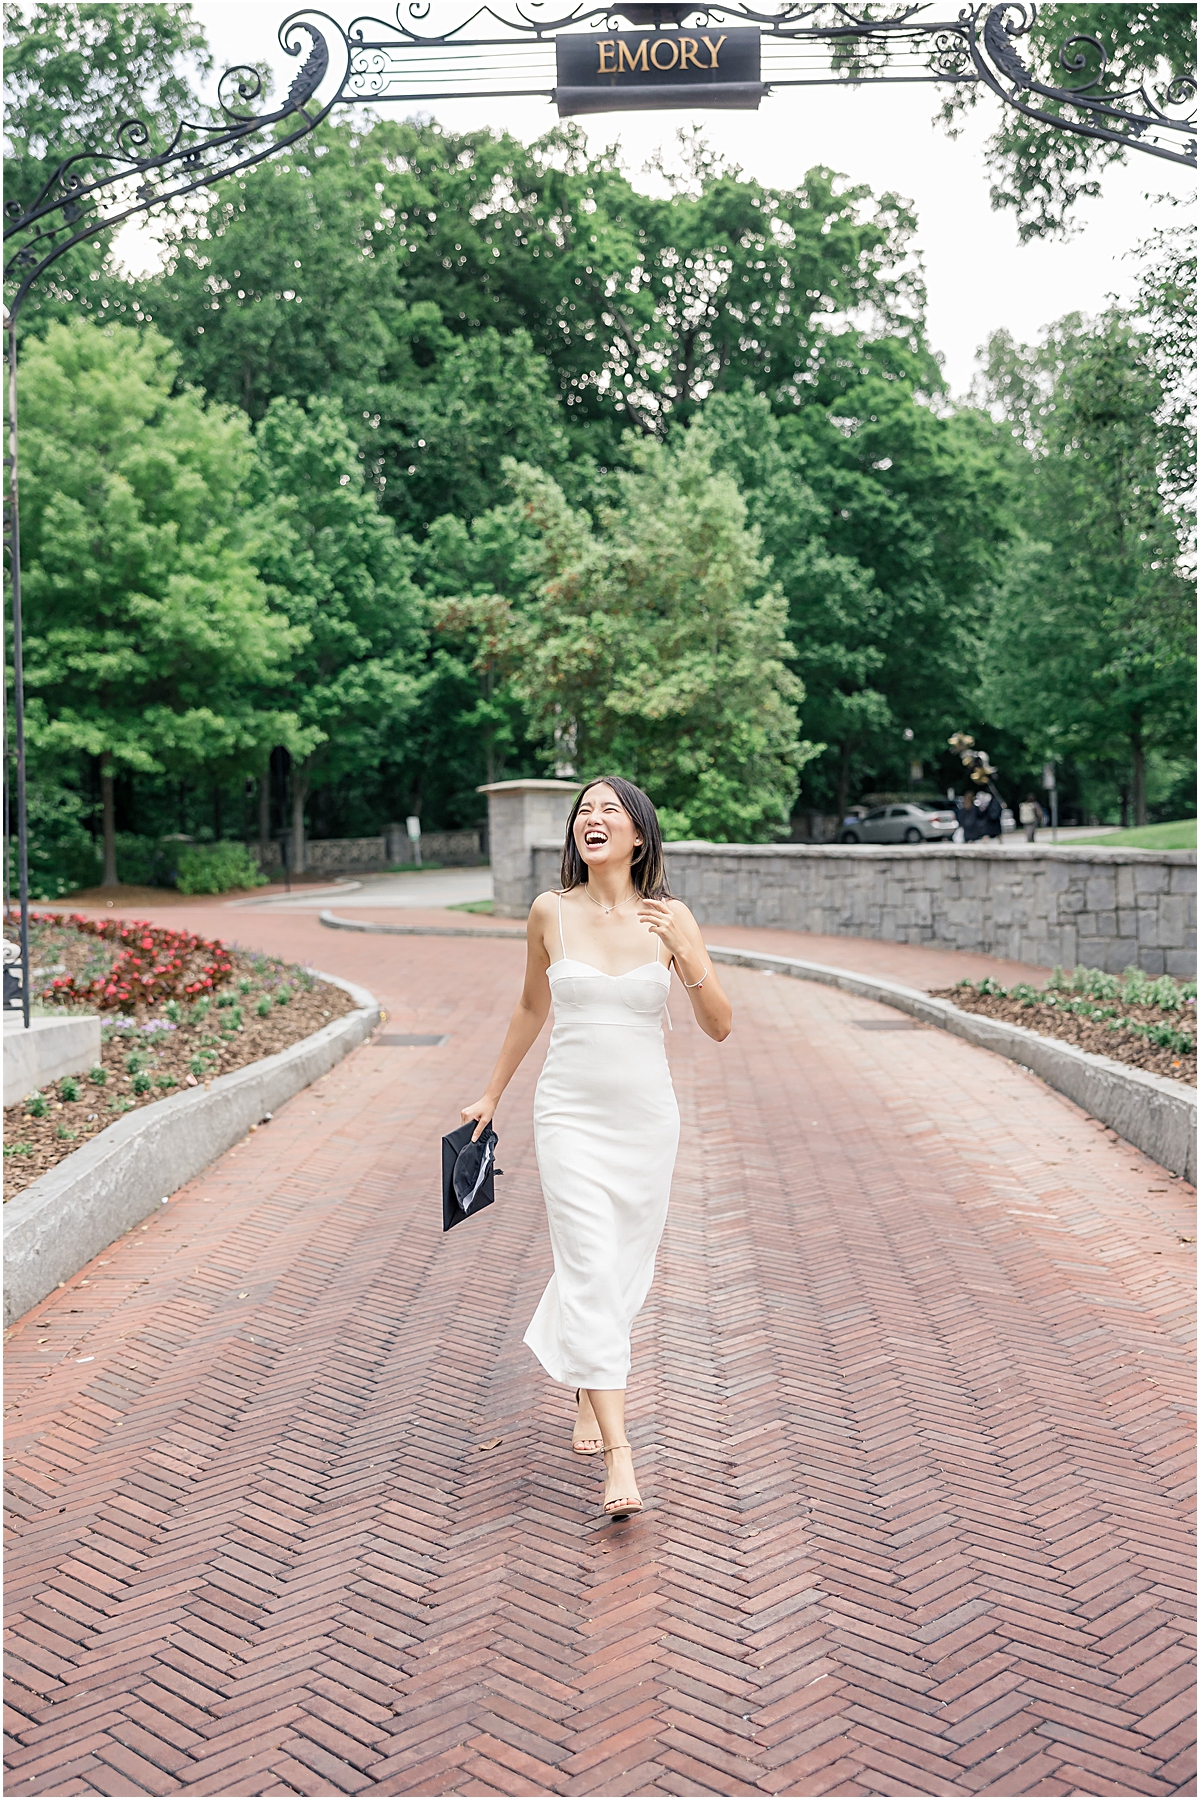 Female college graduate in white dress walking on brick path towards Emory University Senior Photographer holding her black cap for graduation